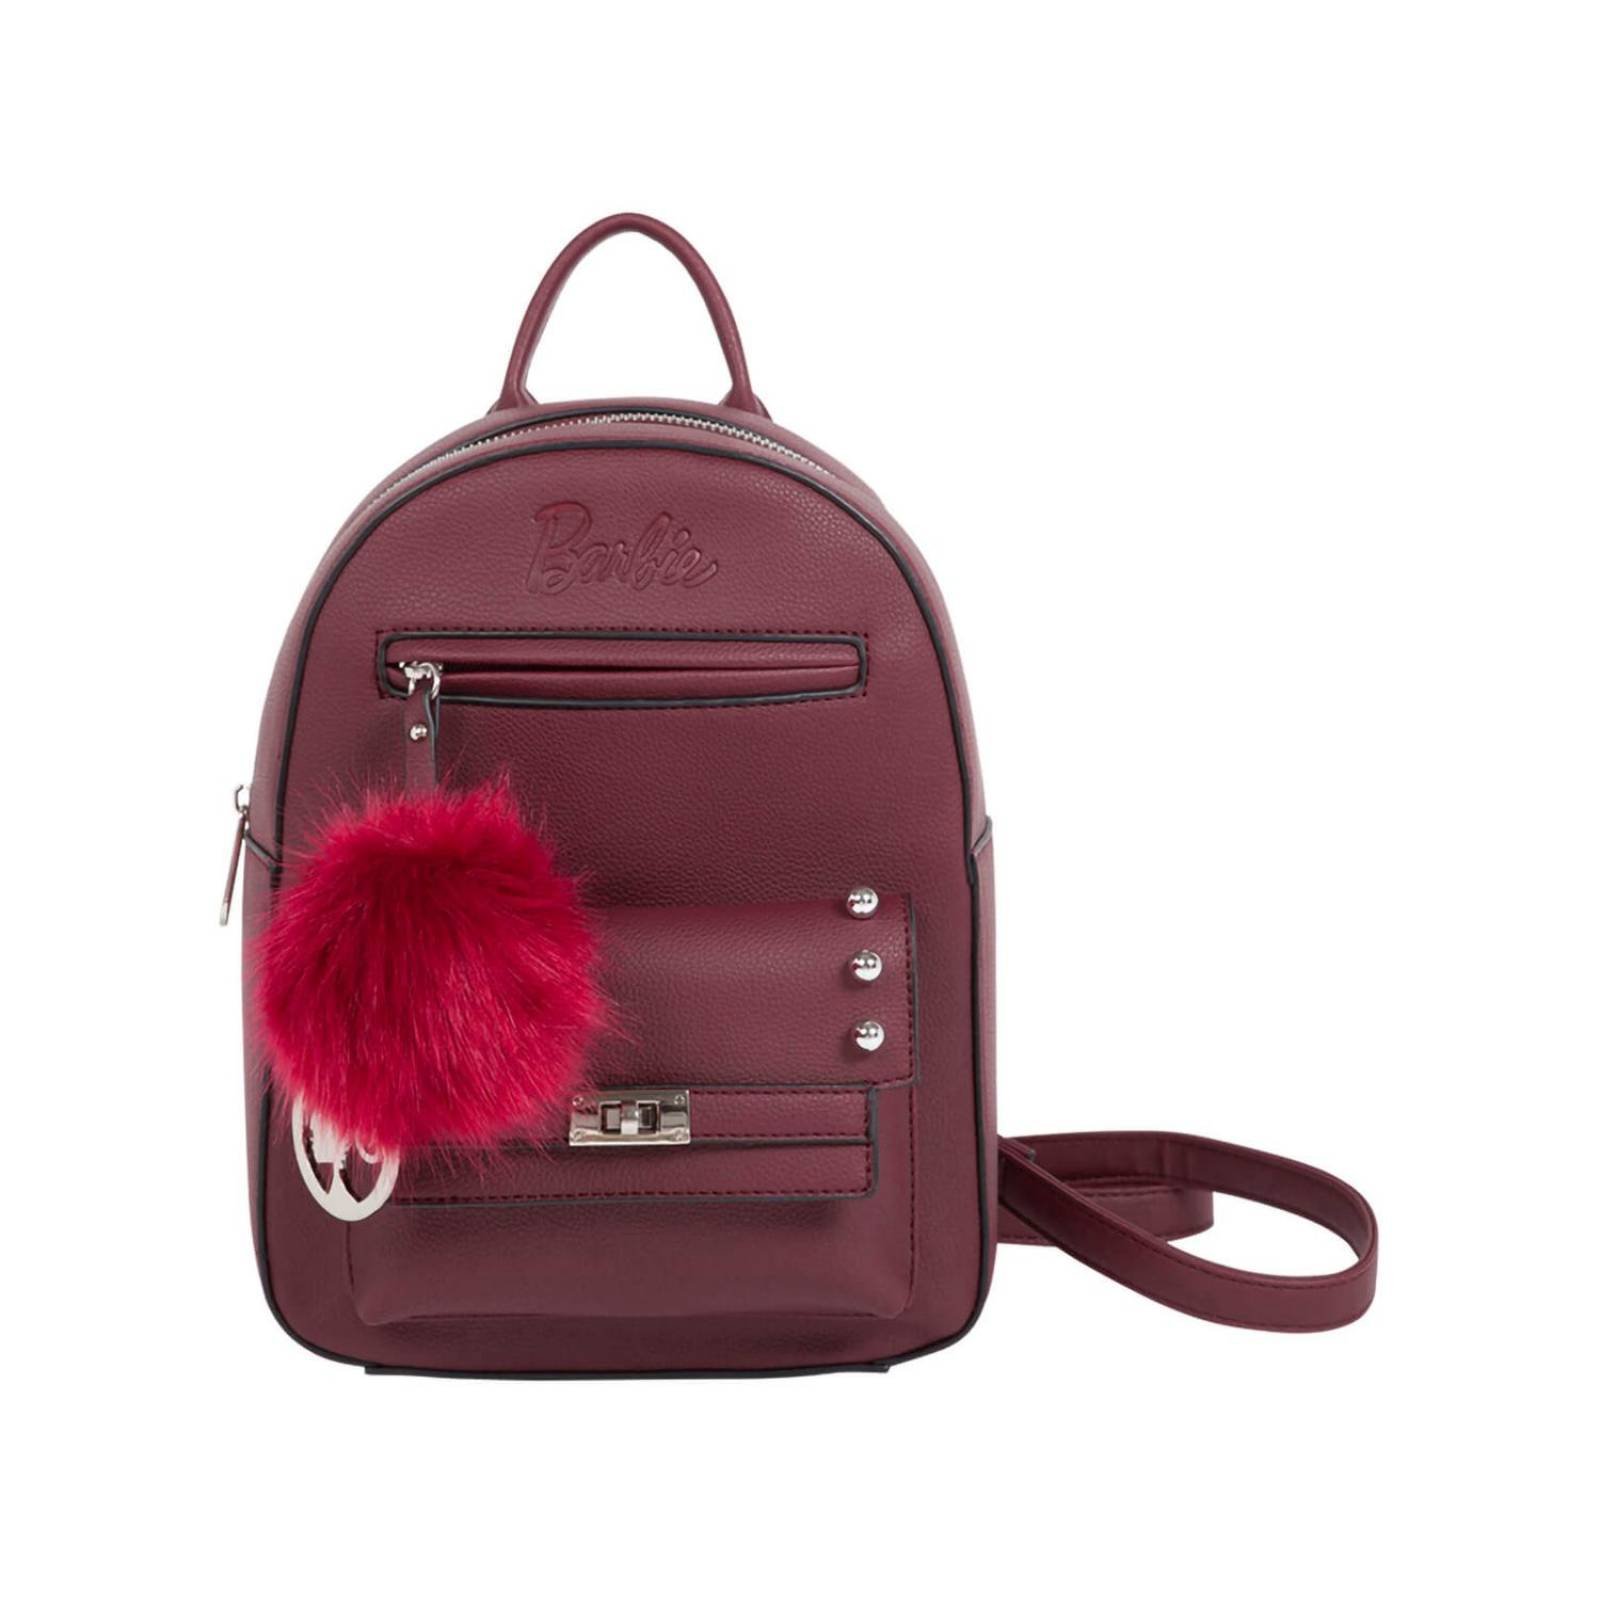 Mochila Barbie GORÉTT backpack 